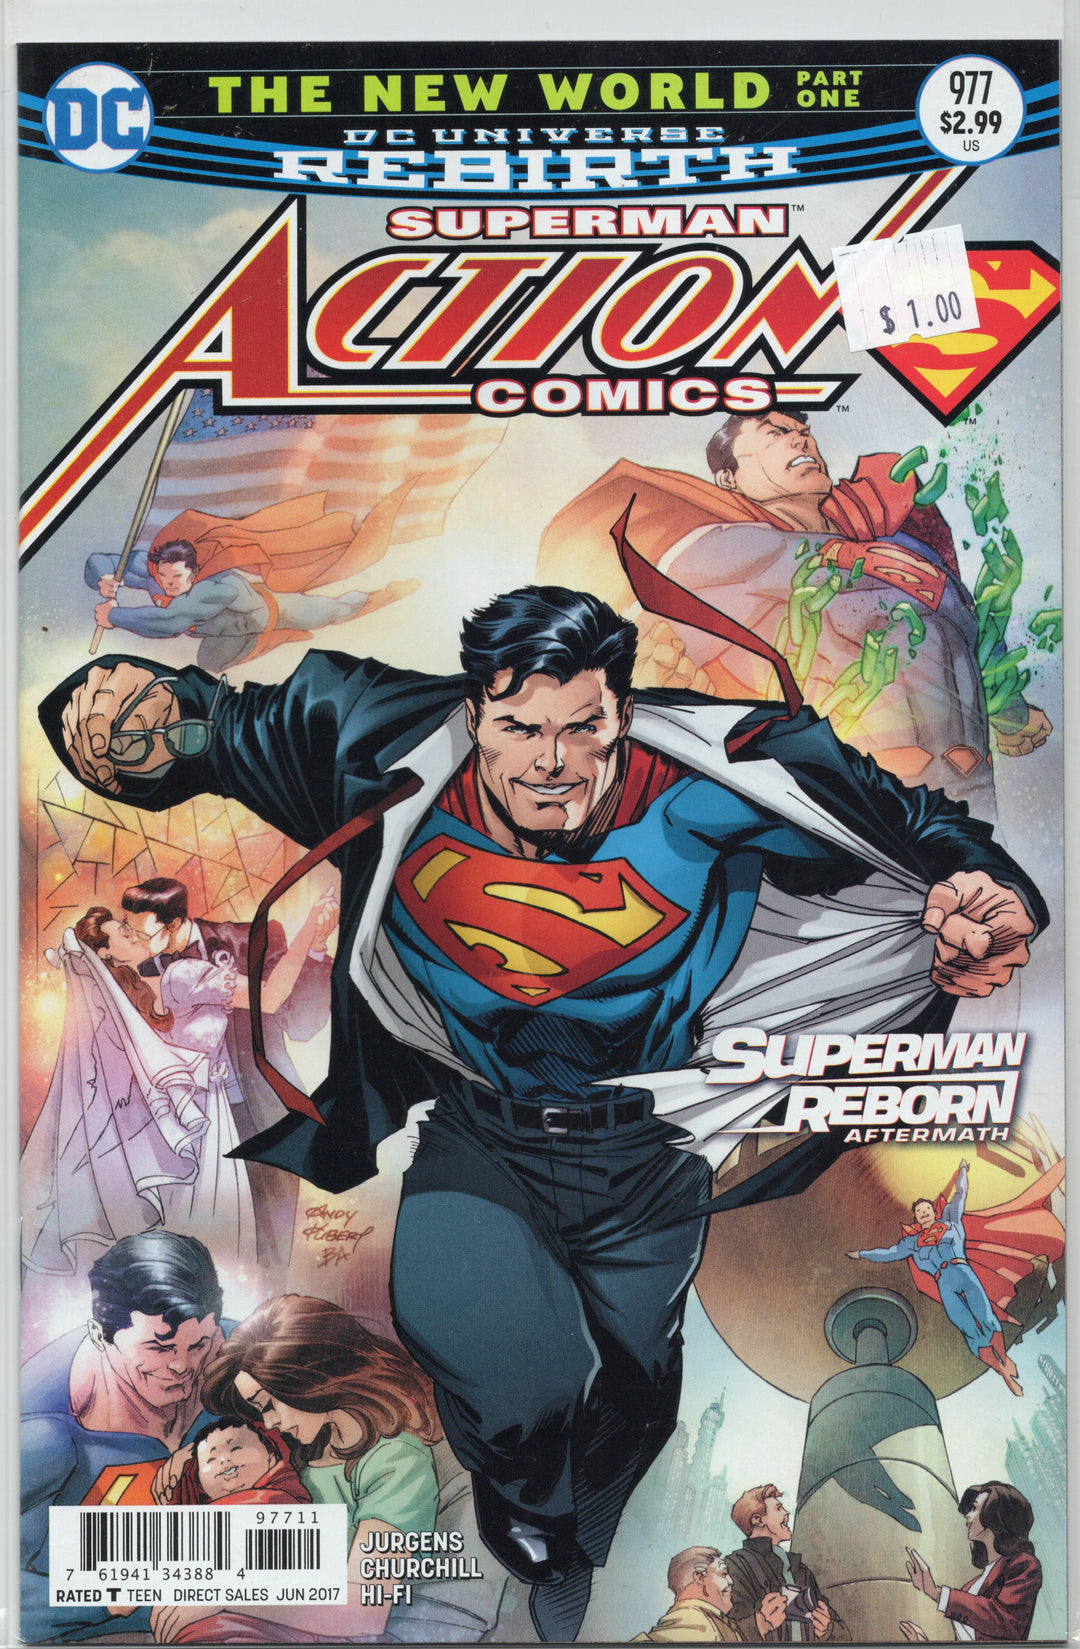 Action Comics #977 Cover A